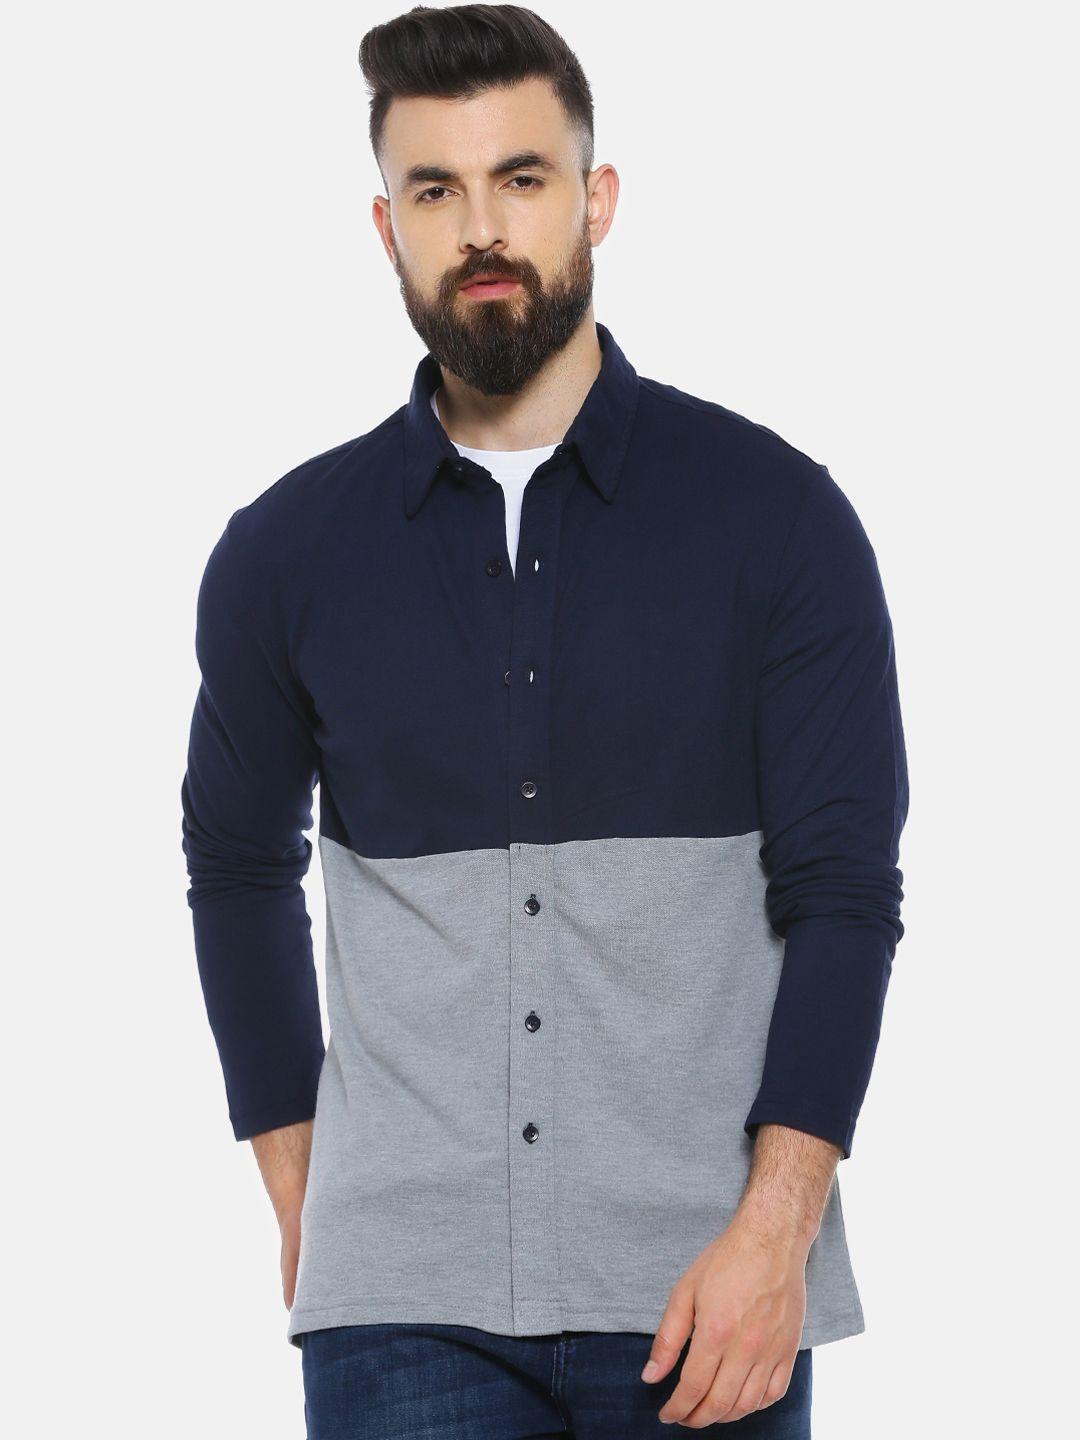 campus sutra men navy blue & grey regular fit colourblocked casual shirt